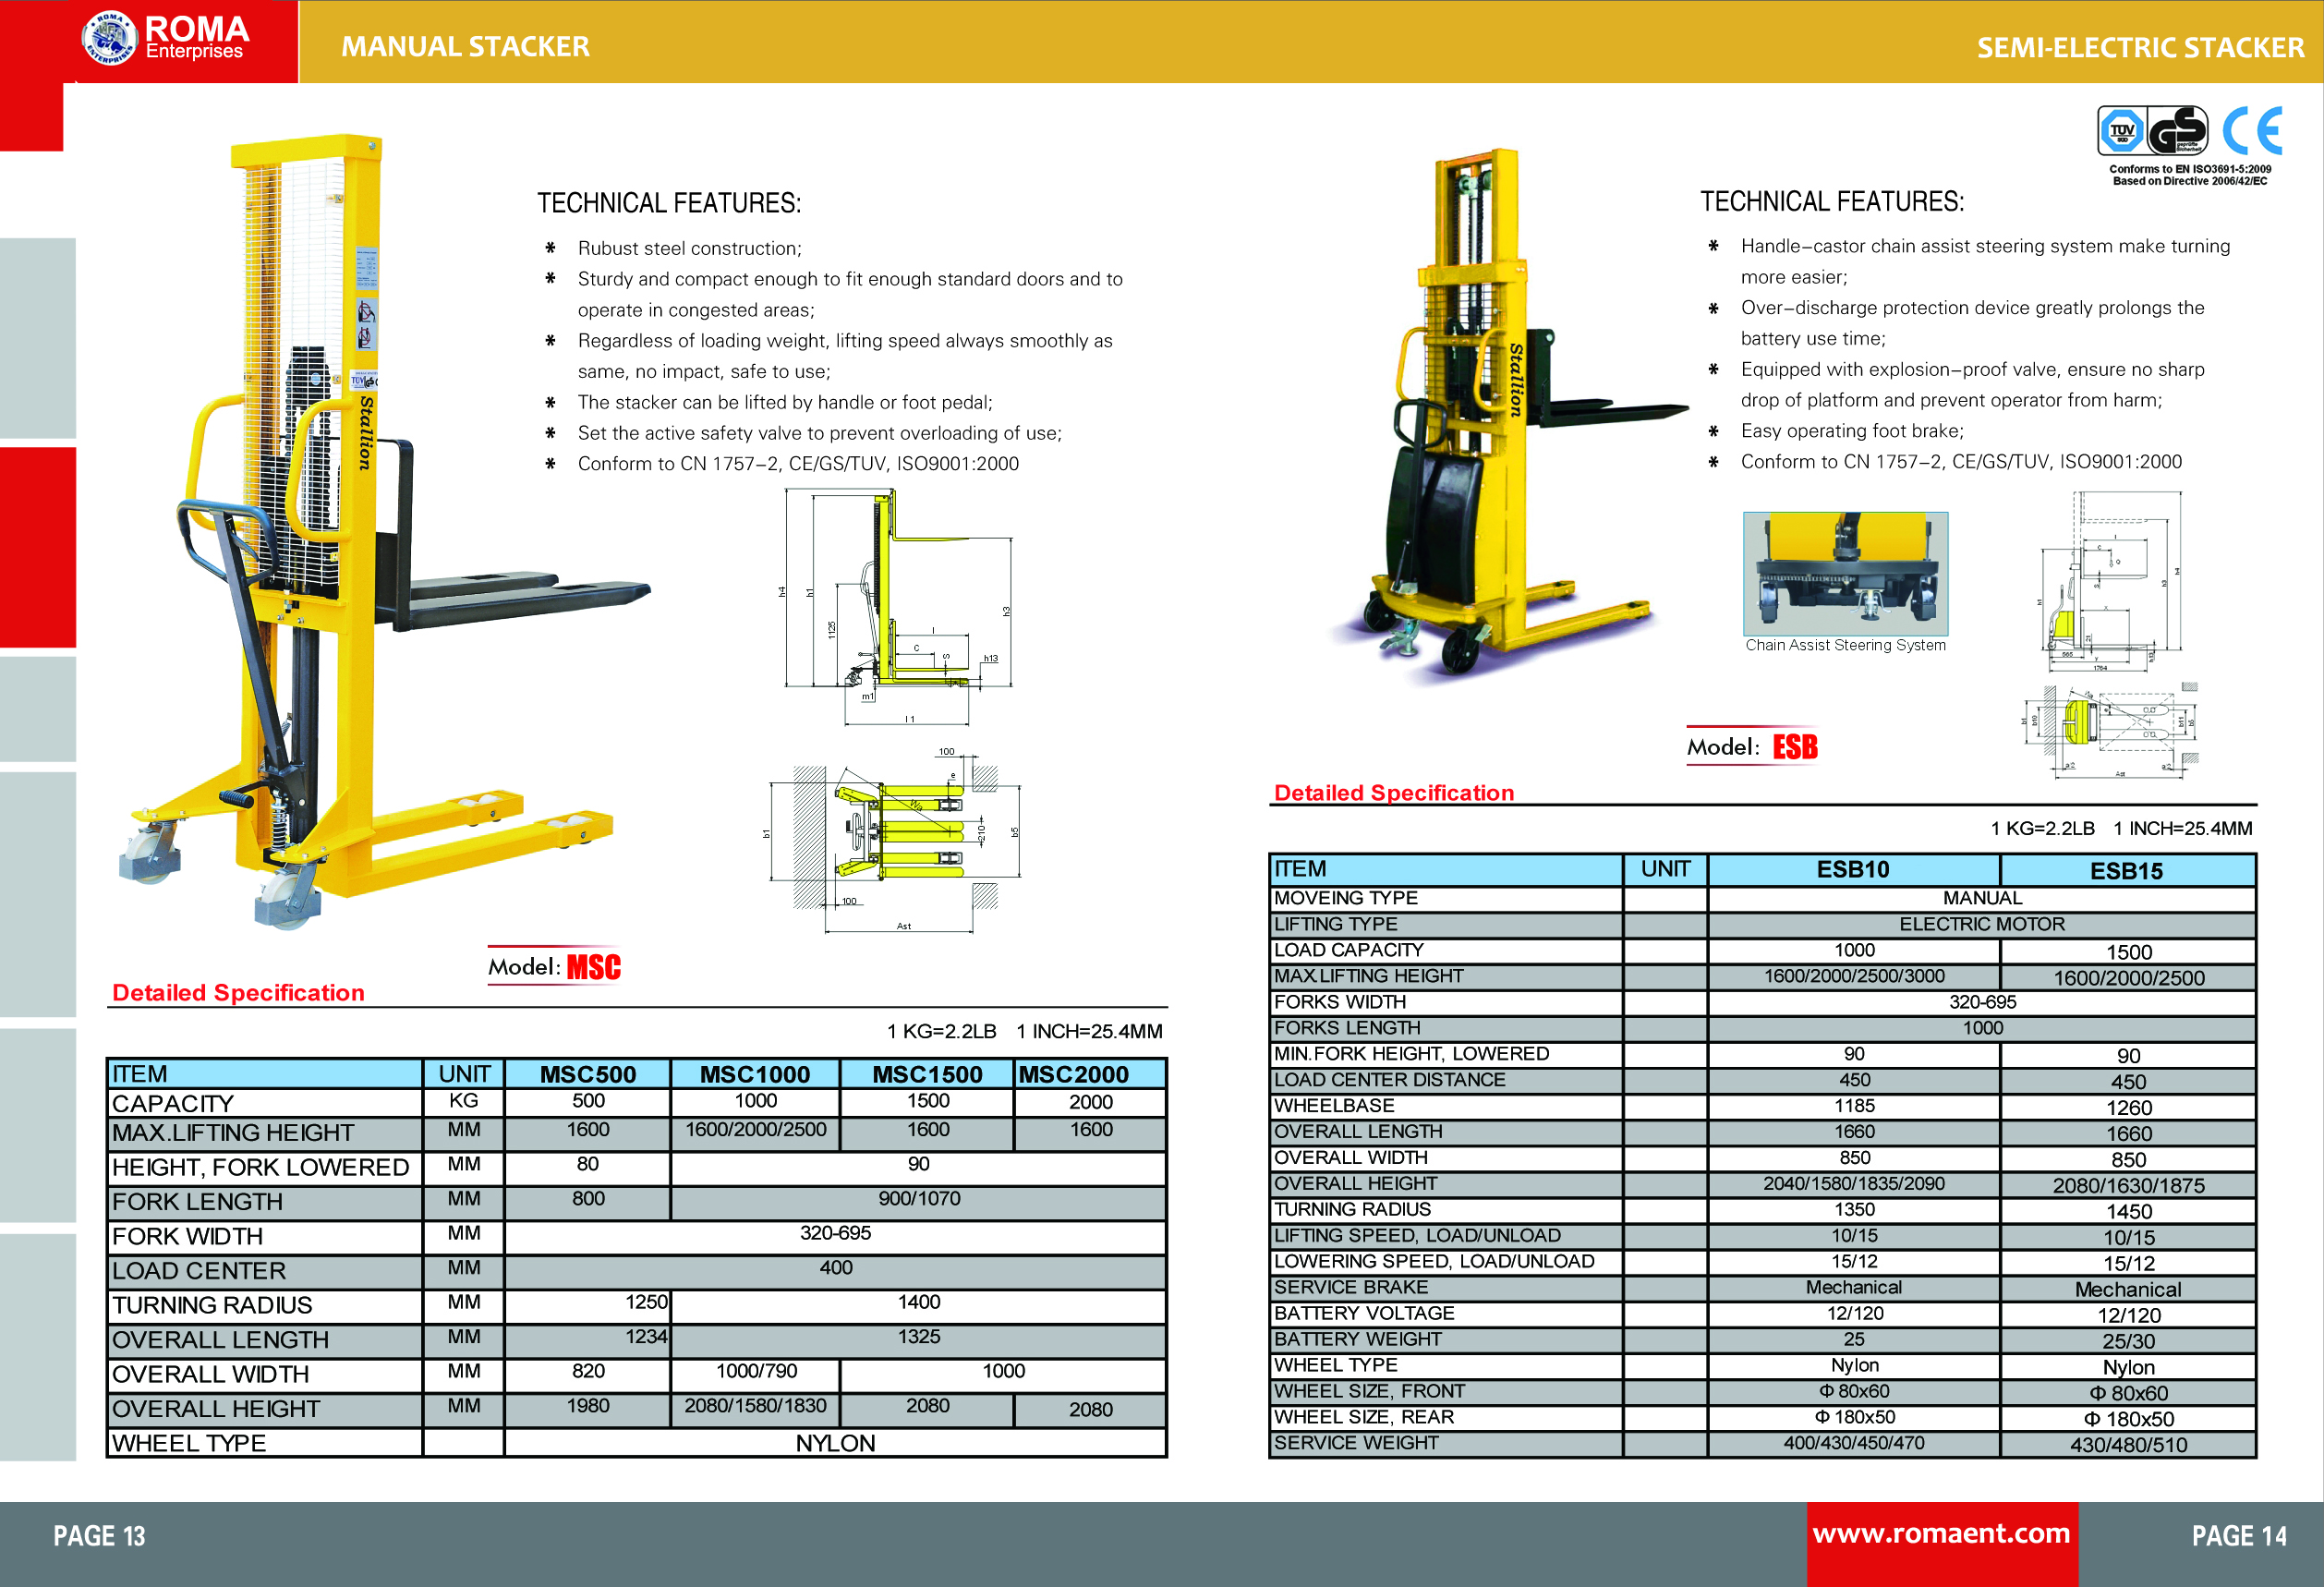 Manual Forklift Supplier In Dubai Manual Stacker Uae Roma Ent